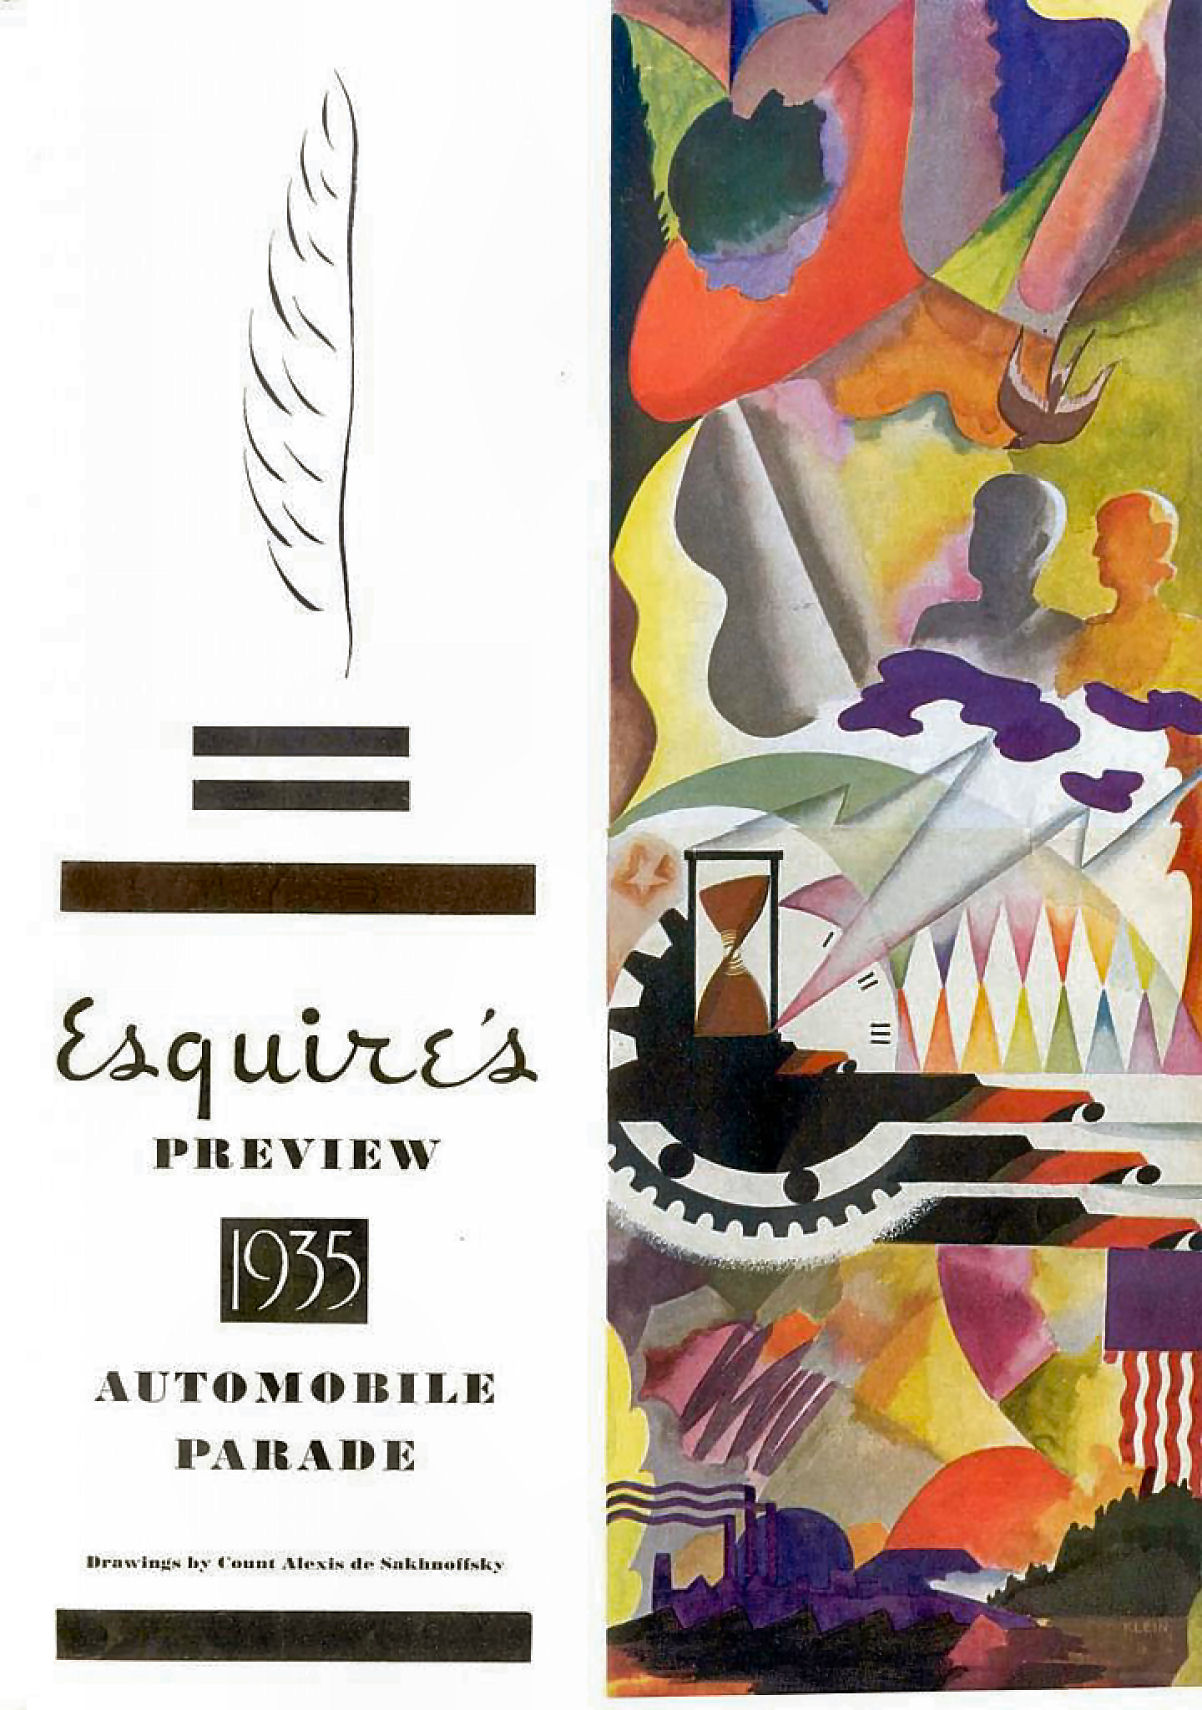 Esquires_1935_Automobile_Parade-00